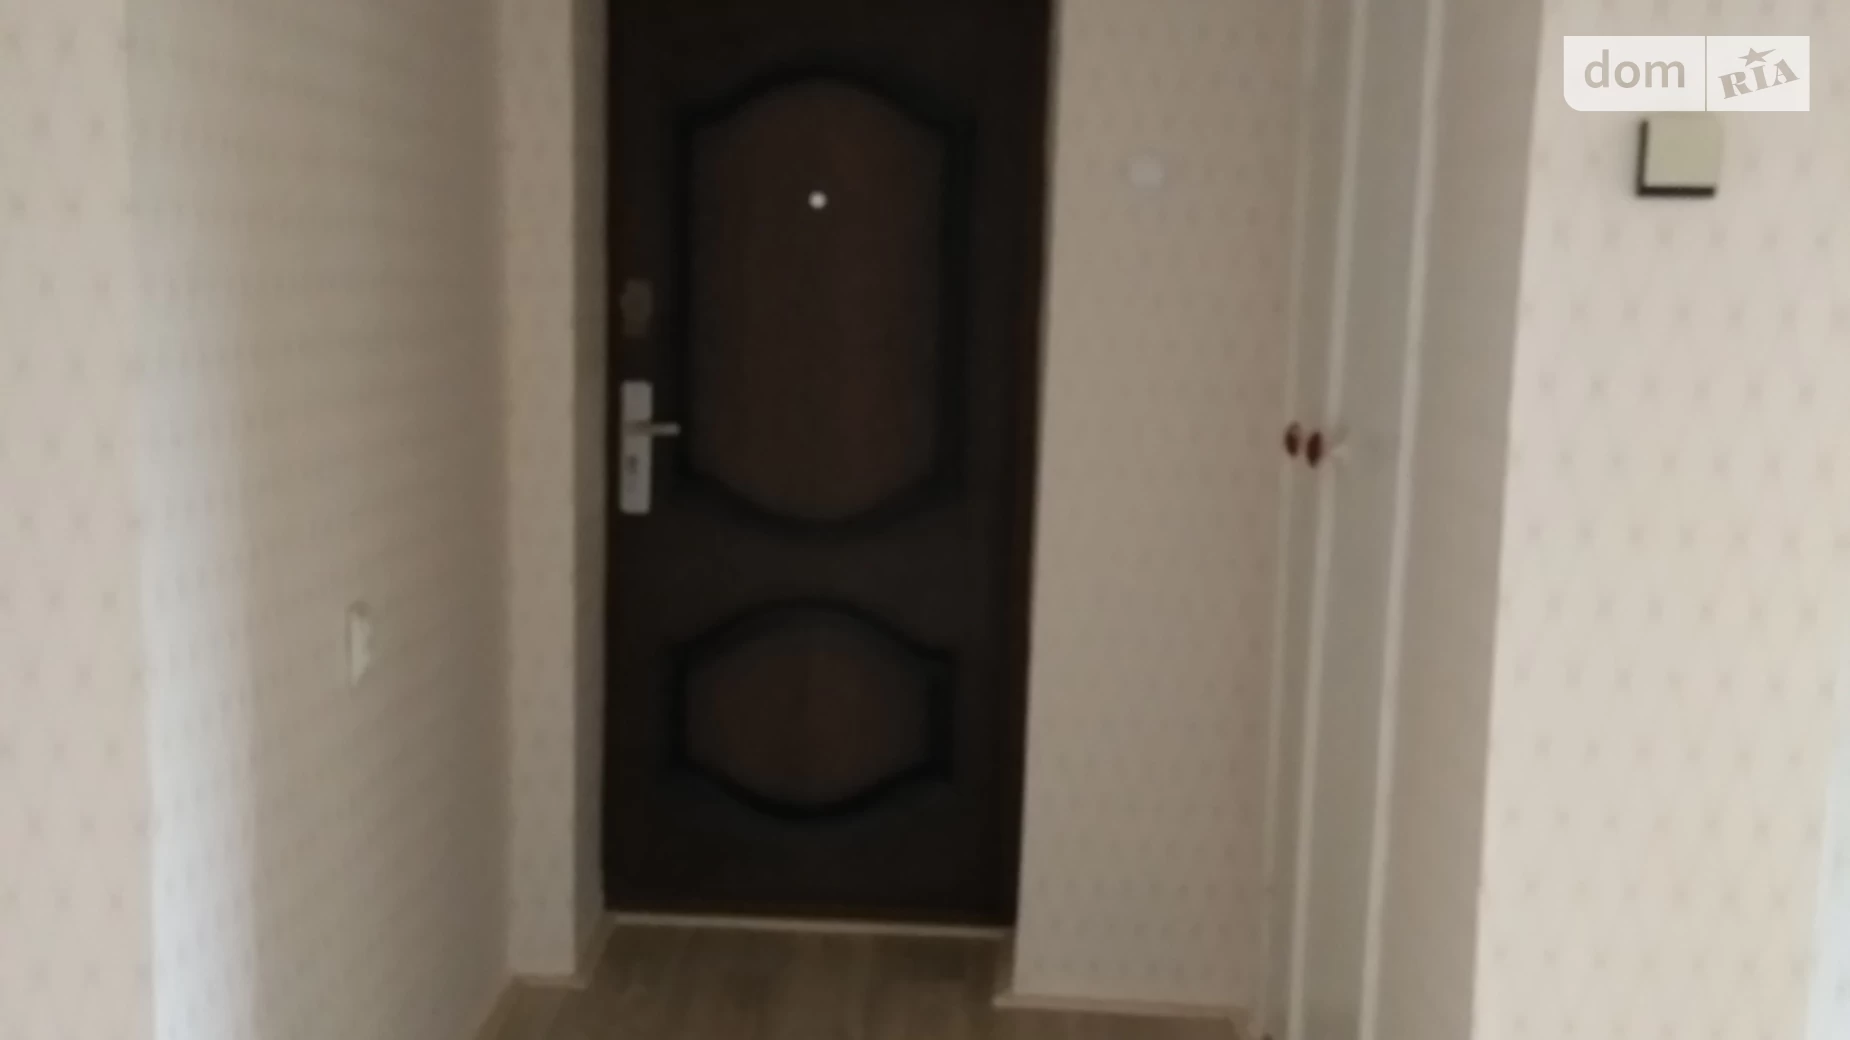 3-кімнатна квартира 58.3 кв. м у Луцьку - фото 4